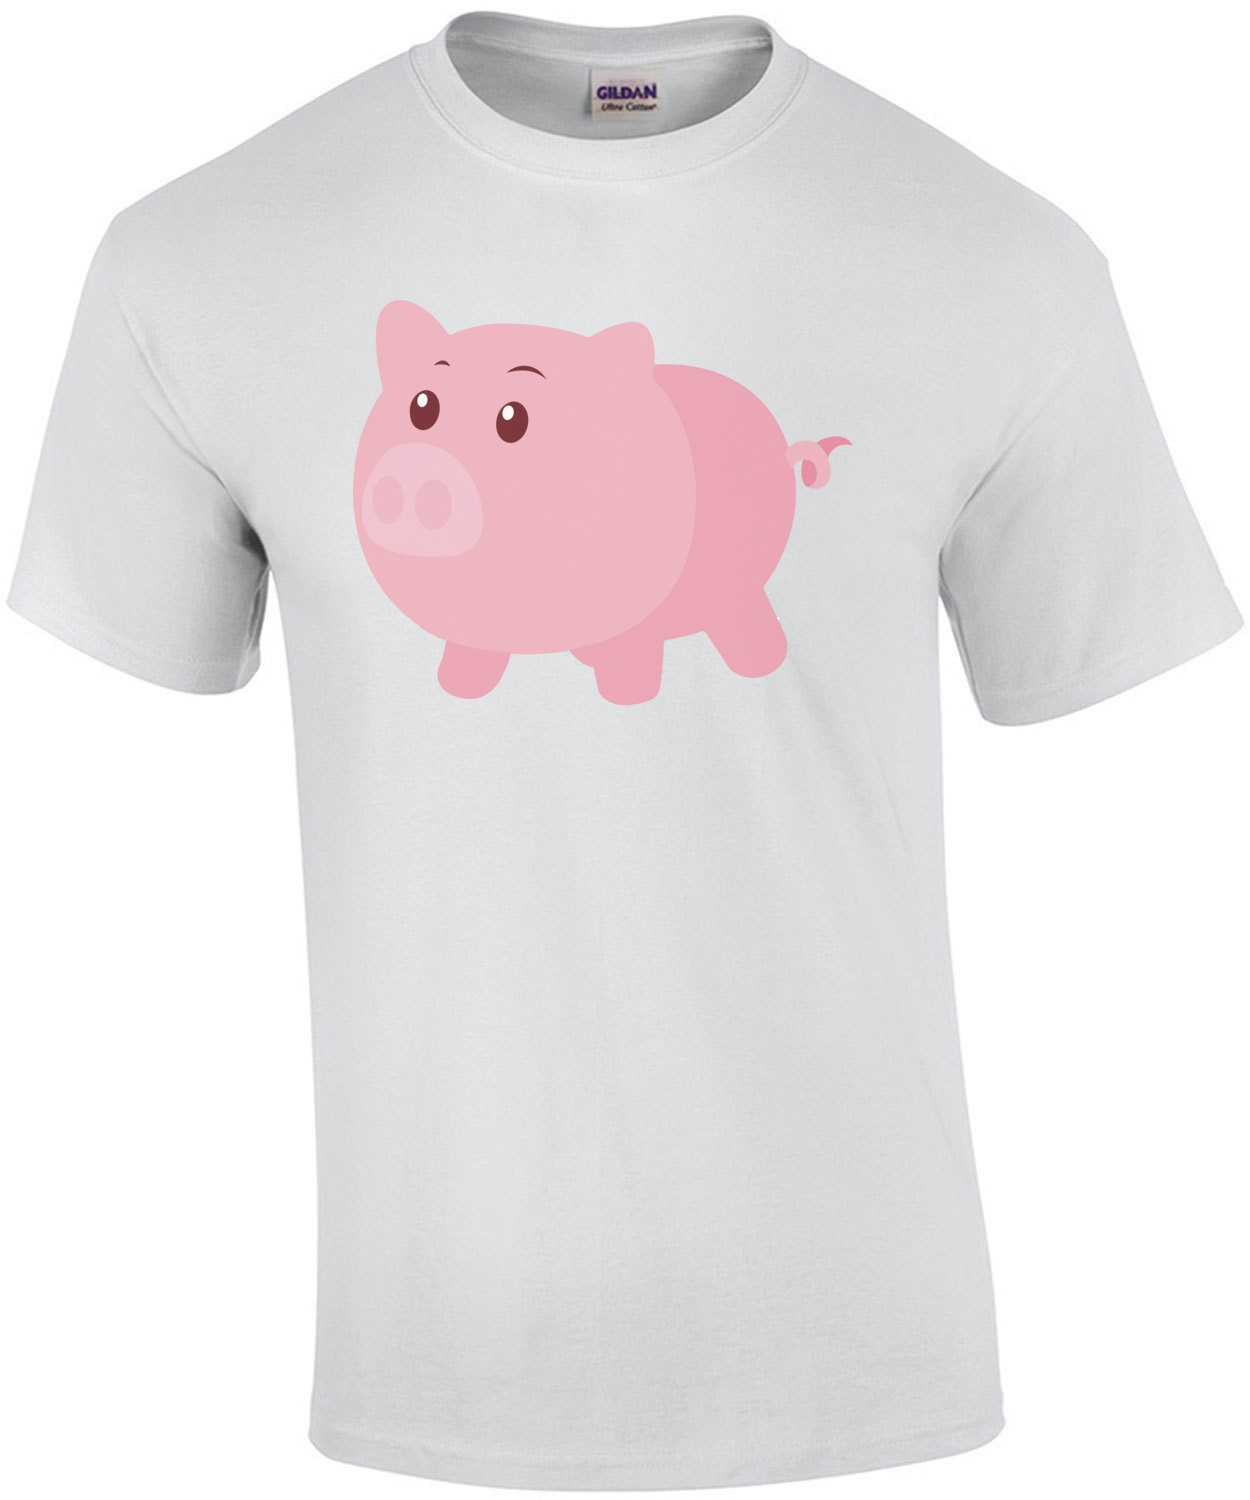 Big fat pig on a t-shirt